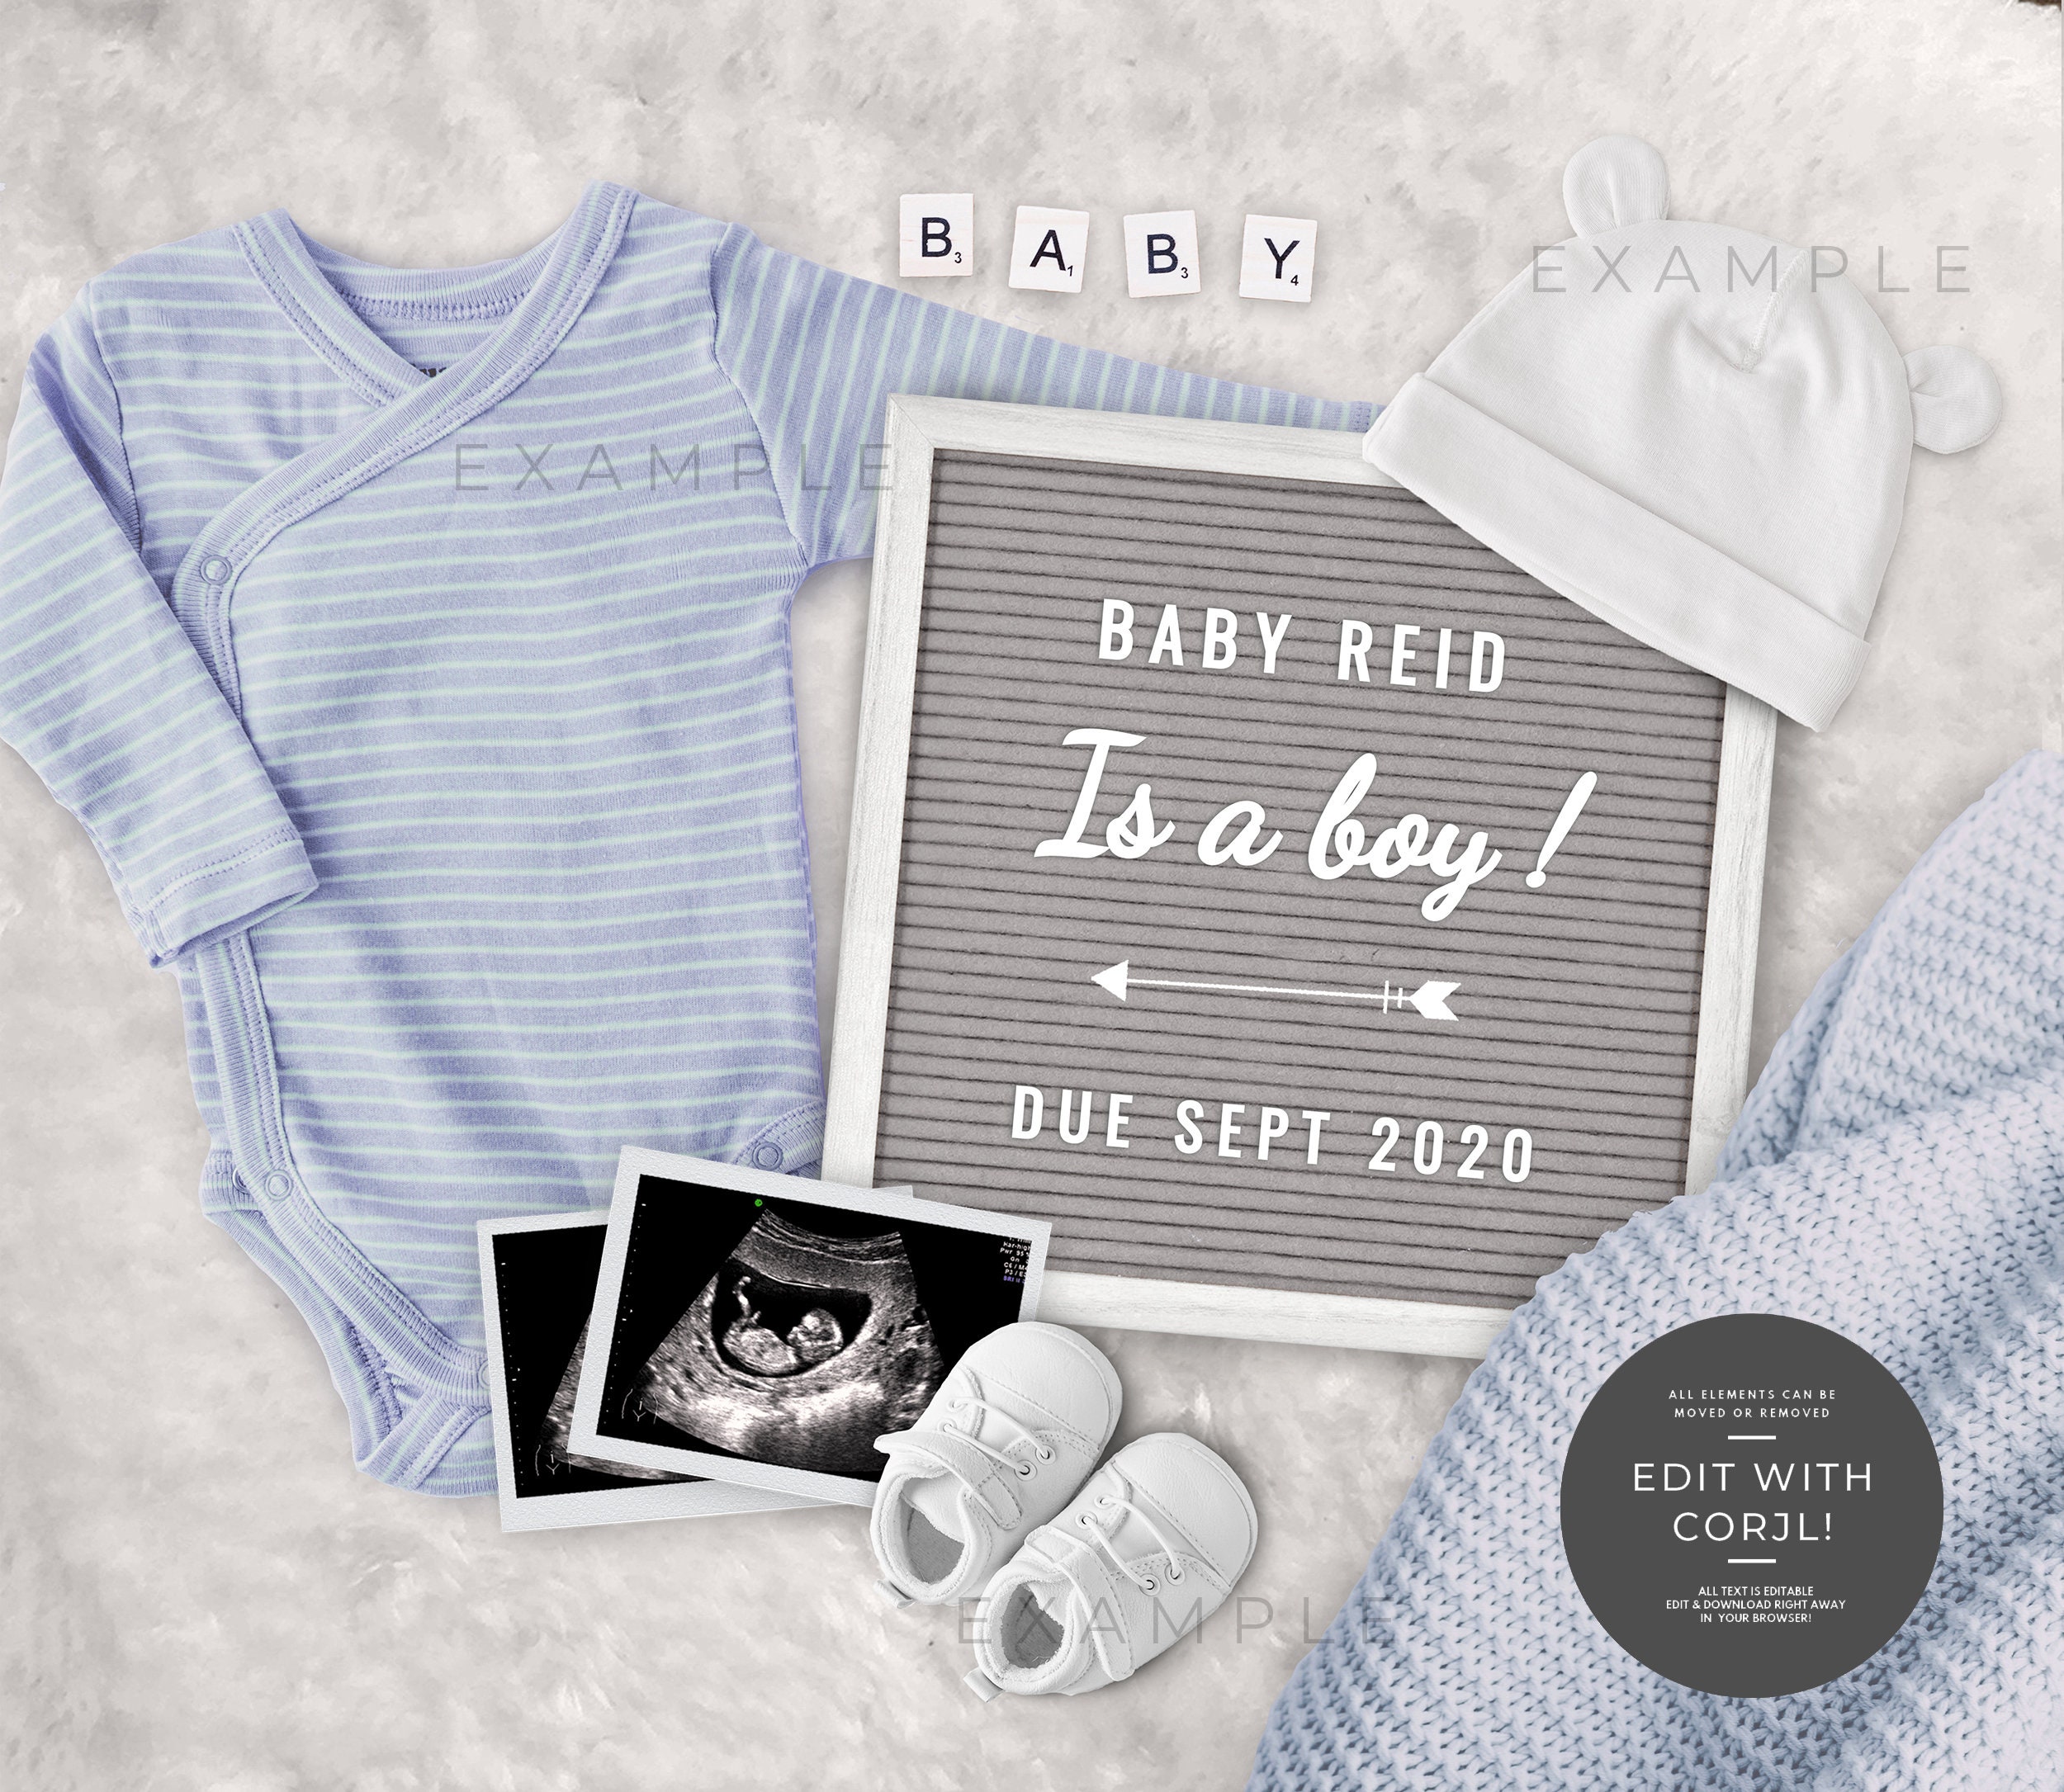 Social Media It's a Boy announcement Editable Pregnancy Announcement Digital Image Gender Reveal Blue Digital Image Baby Boy